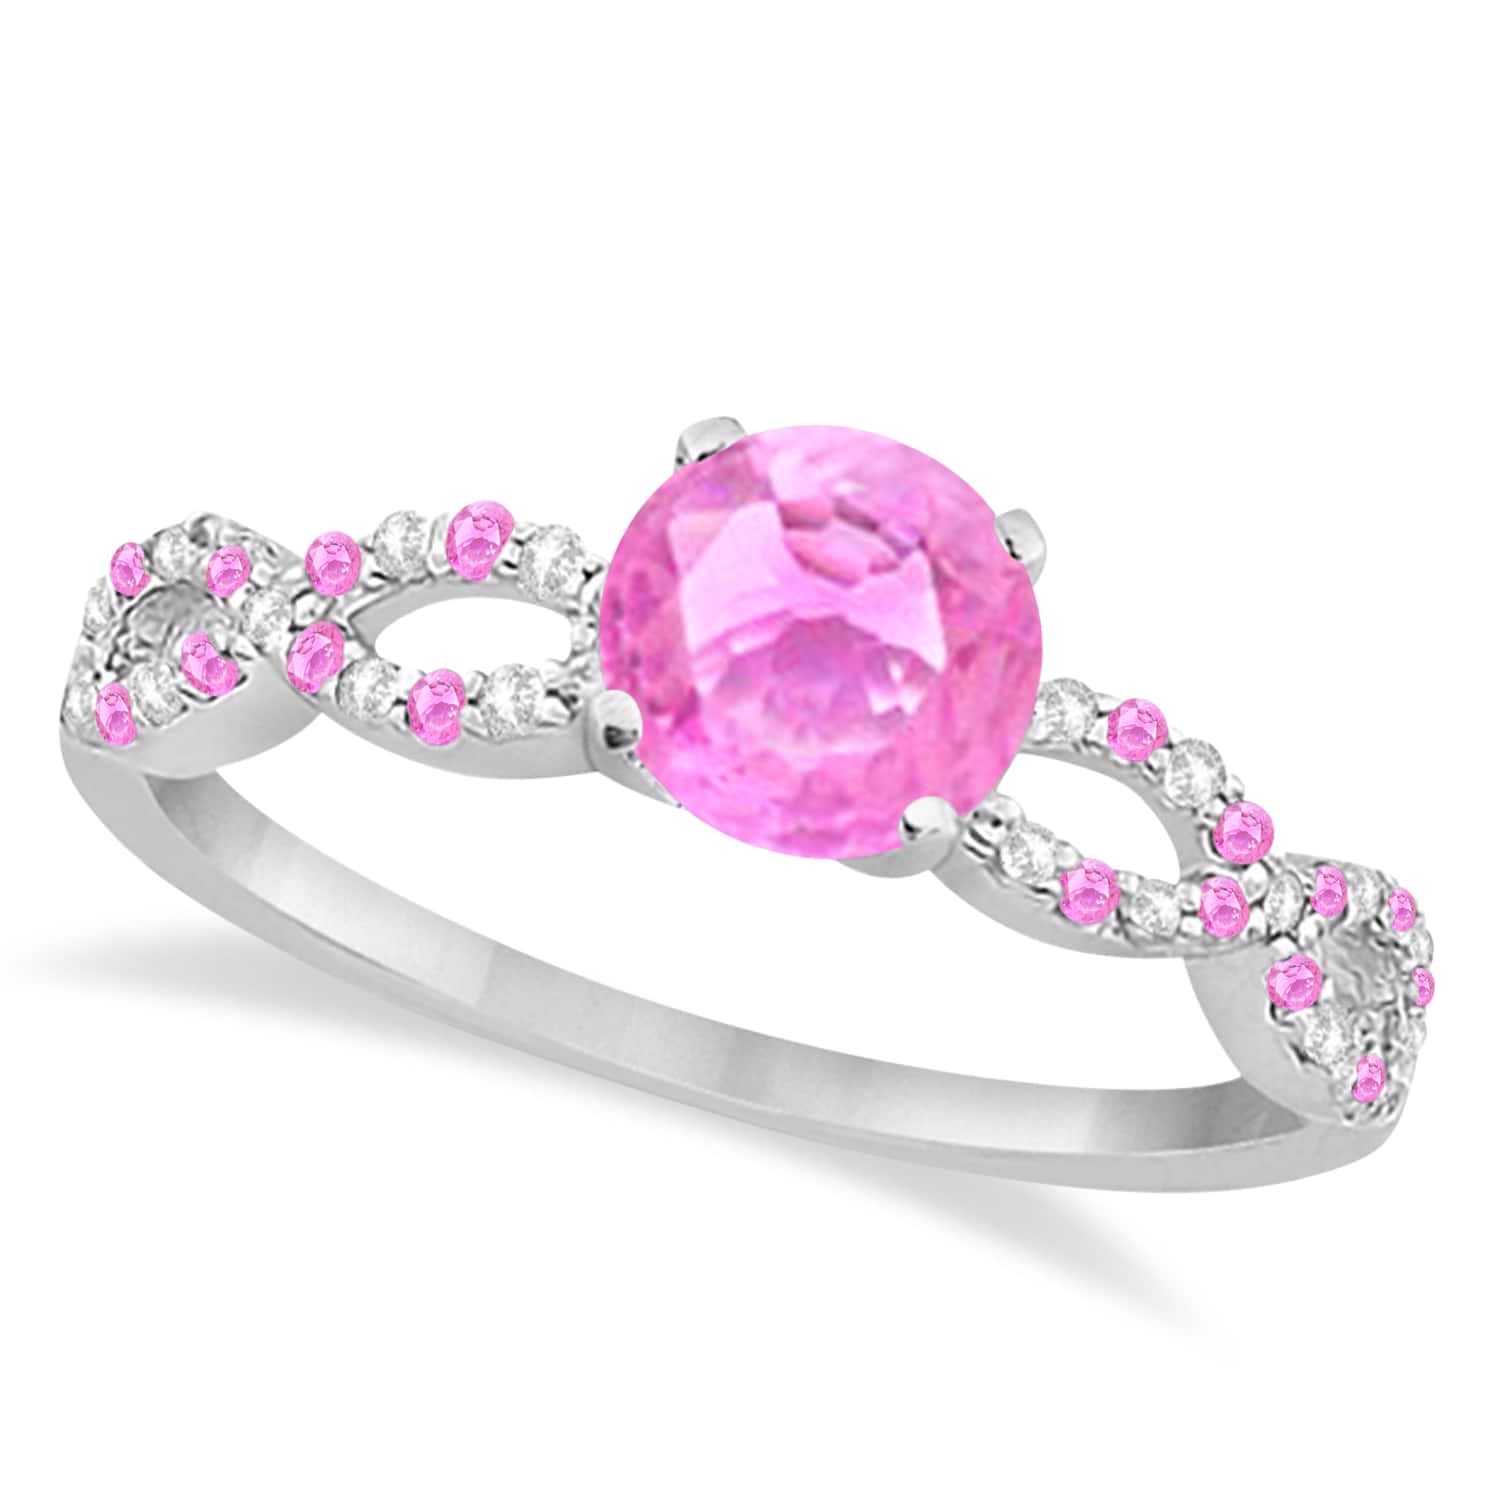 Diamond & Pink Sapphire Infinity Engagement Ring 18k White Gold 1.45ct